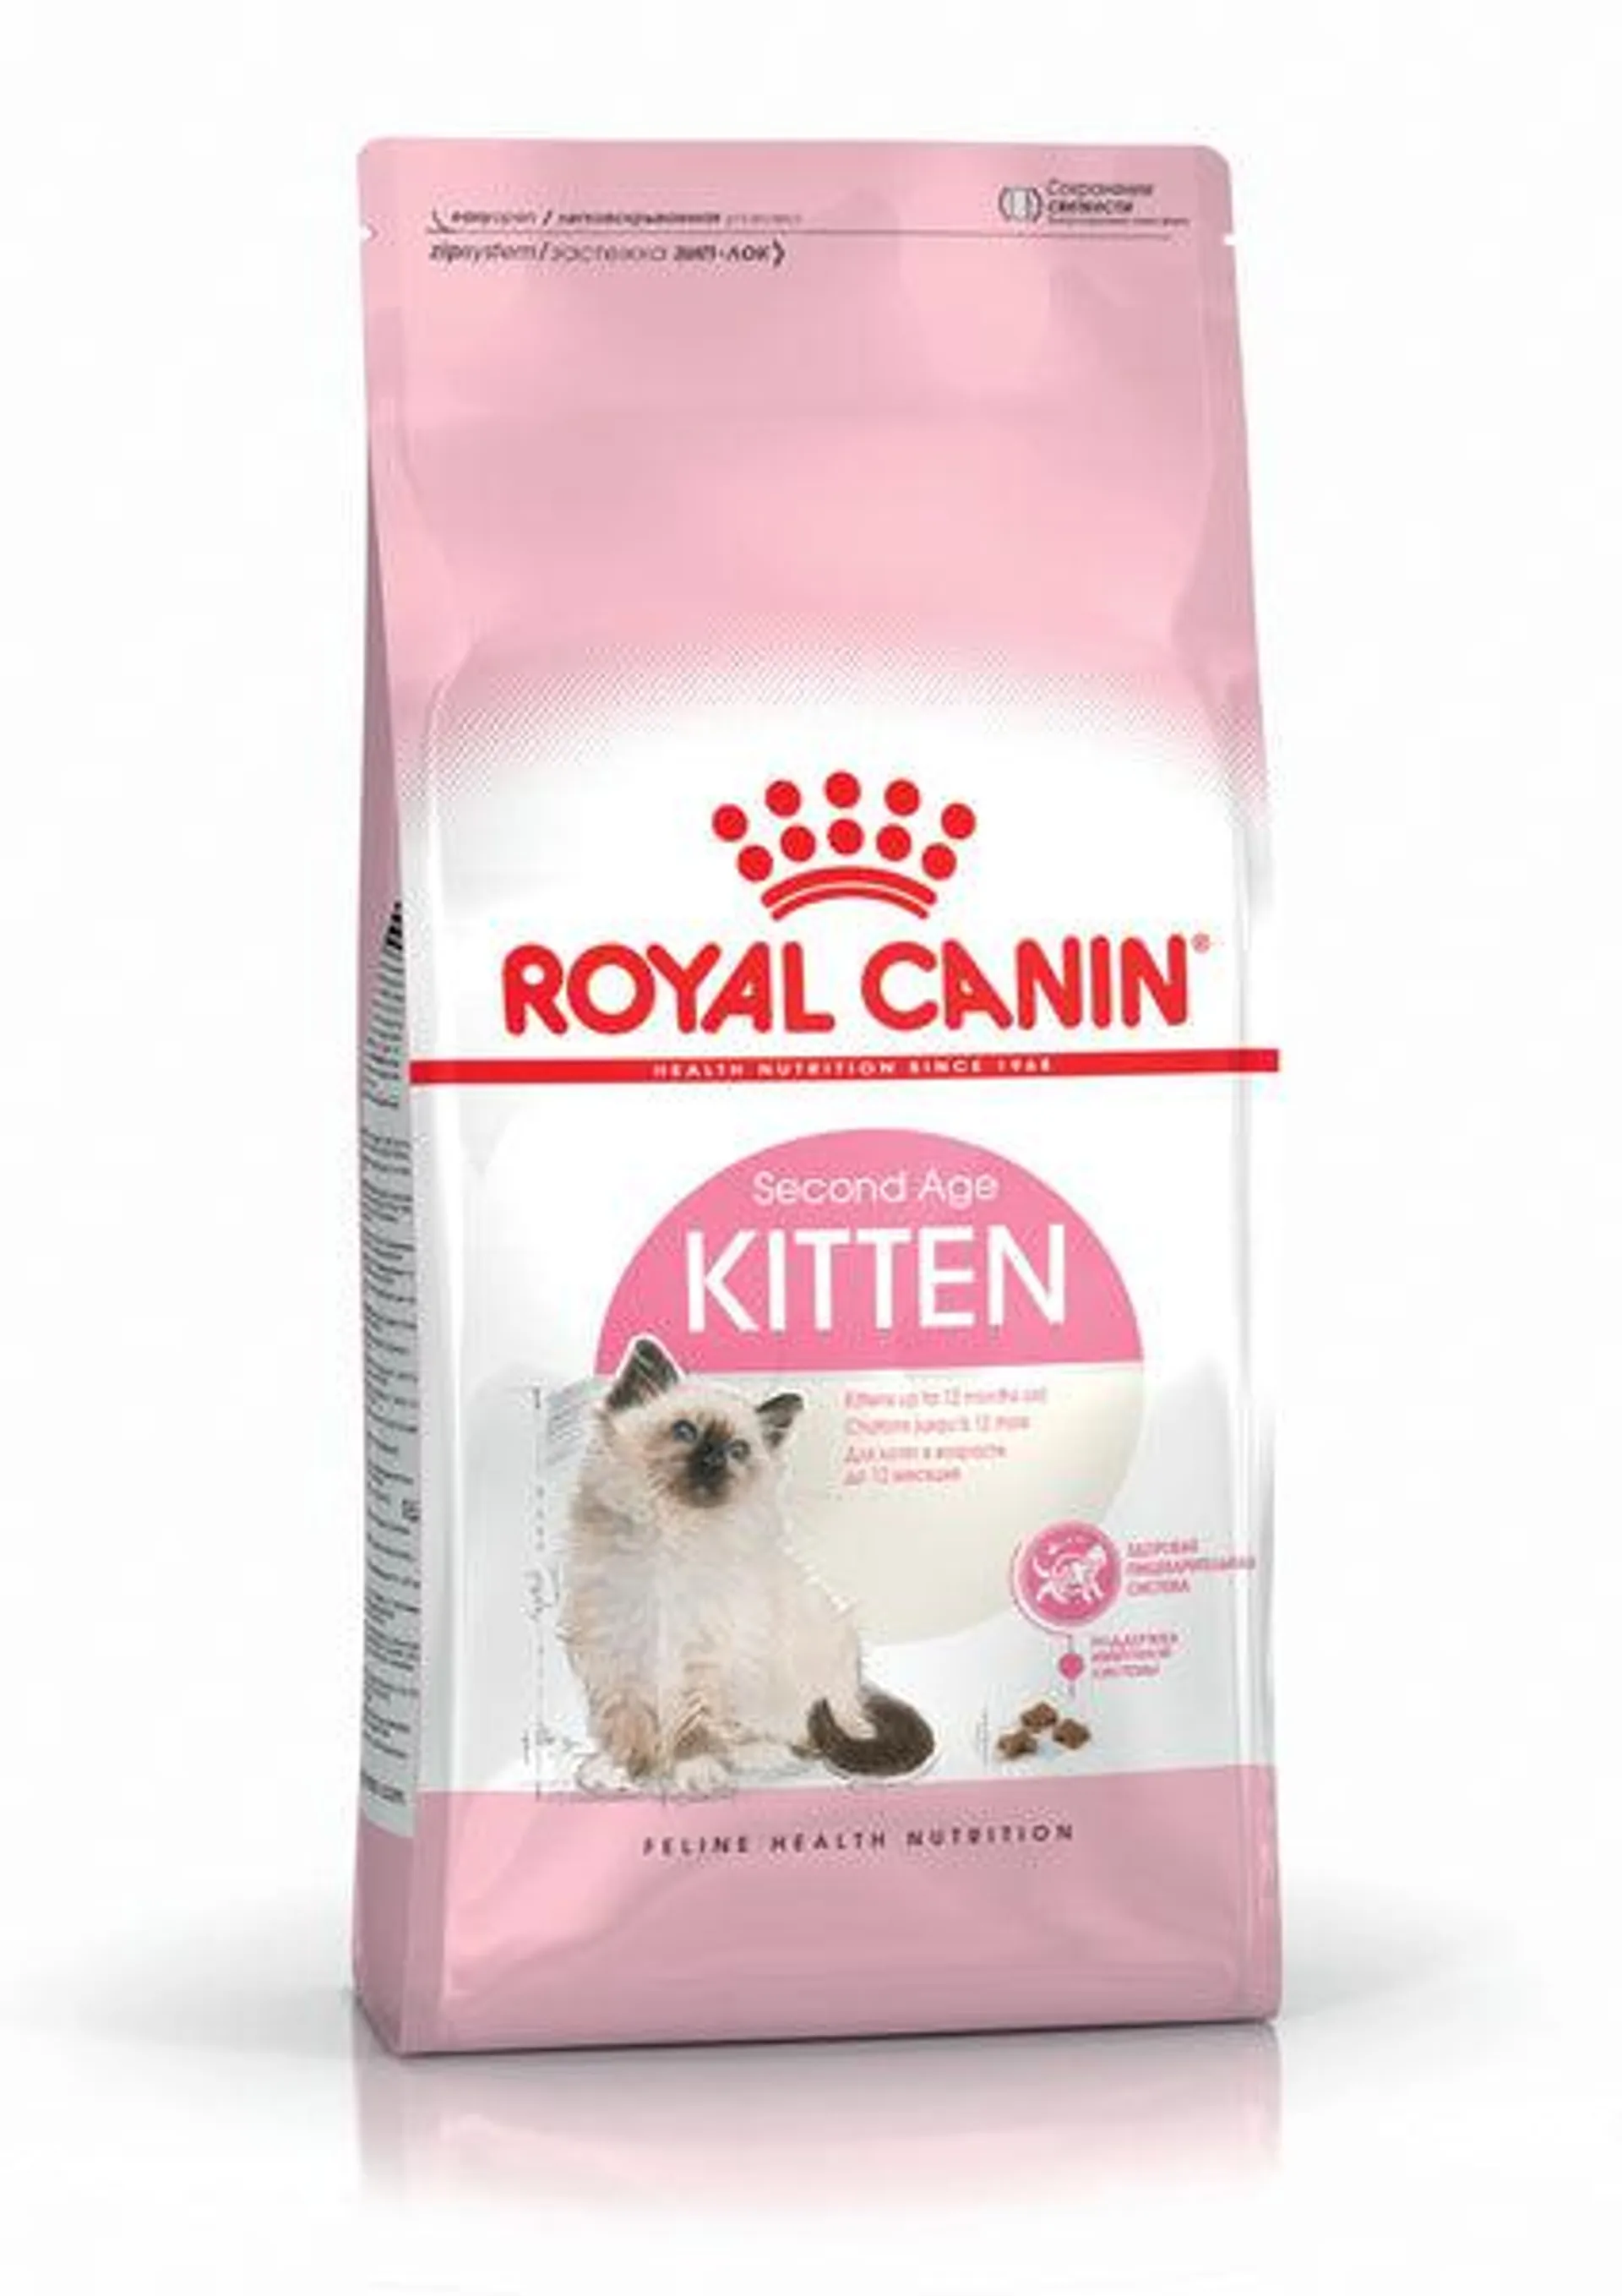 Royal Canin - Kitten Dry Food (2kg)